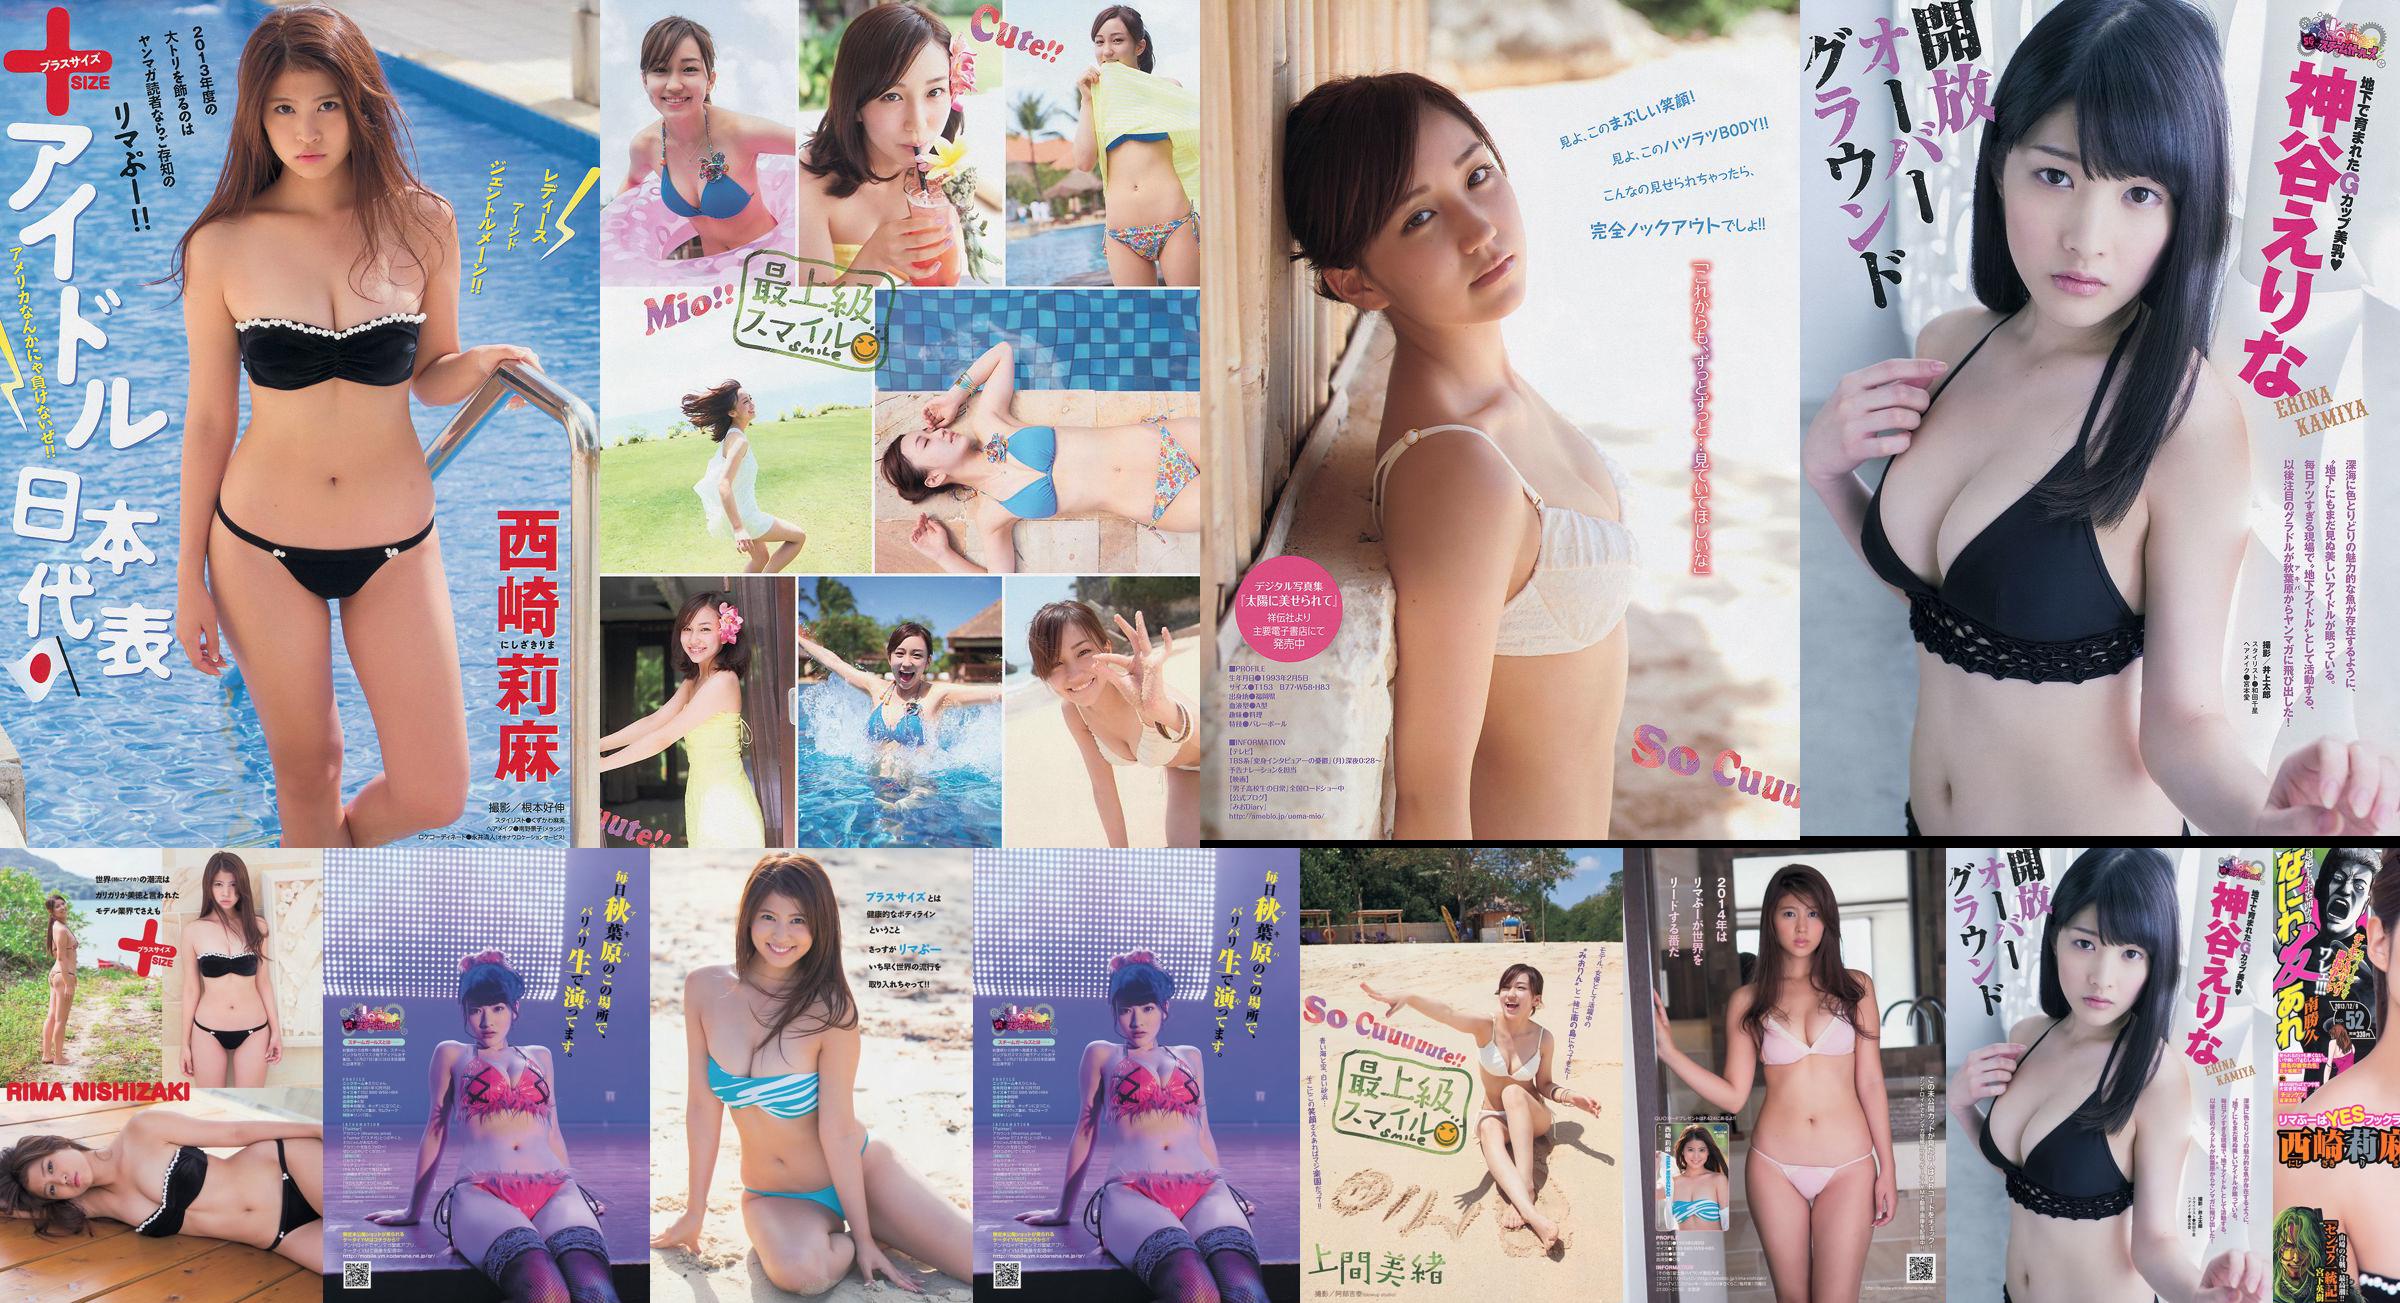 [Tạp chí trẻ] Rima Nishizaki Mio Uema Erina Kamiya 2013 Ảnh số 52 Moshi No.4236ca Trang 6